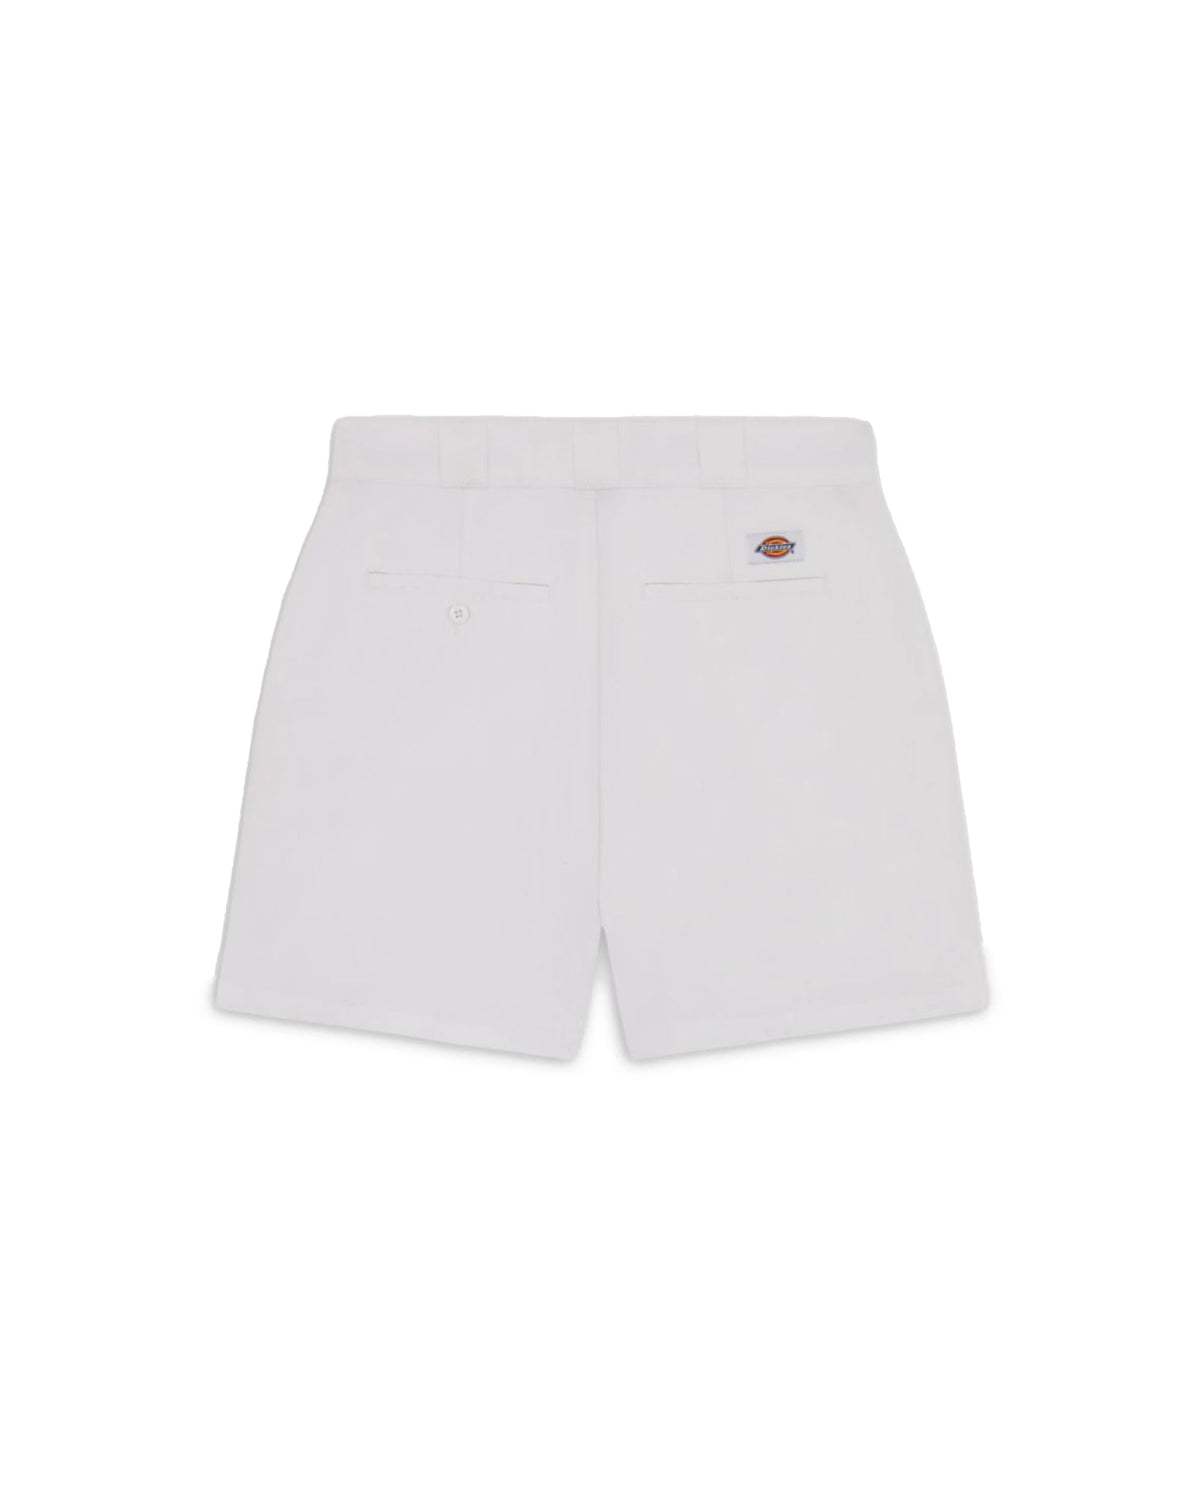 Woman's Shorts Dickies Phoenix Rec White